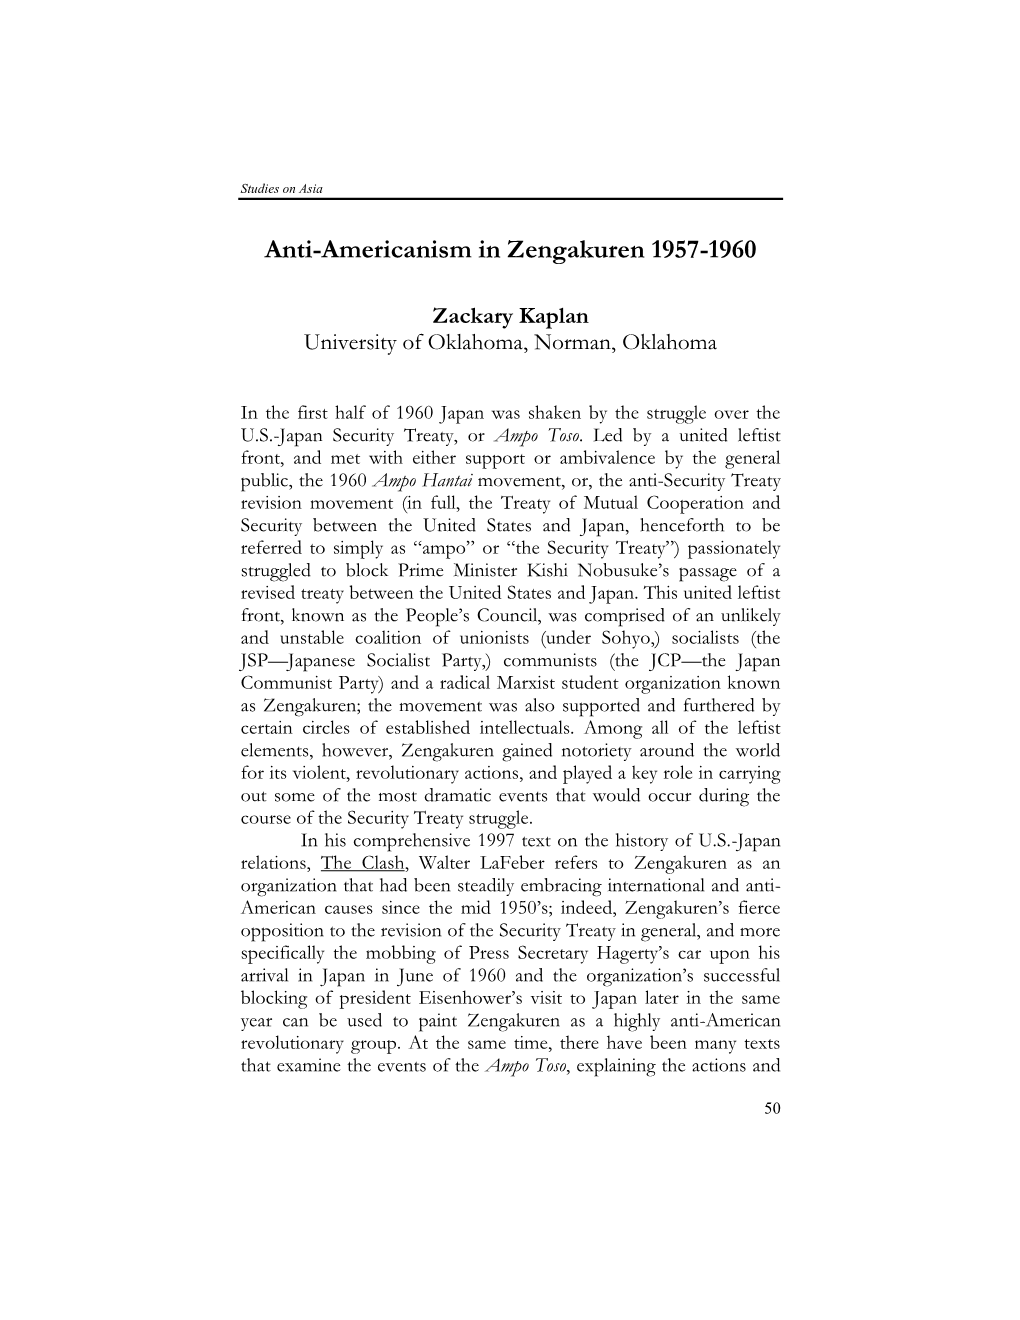 Anti-Americanism in Zengakuren 1957-1960